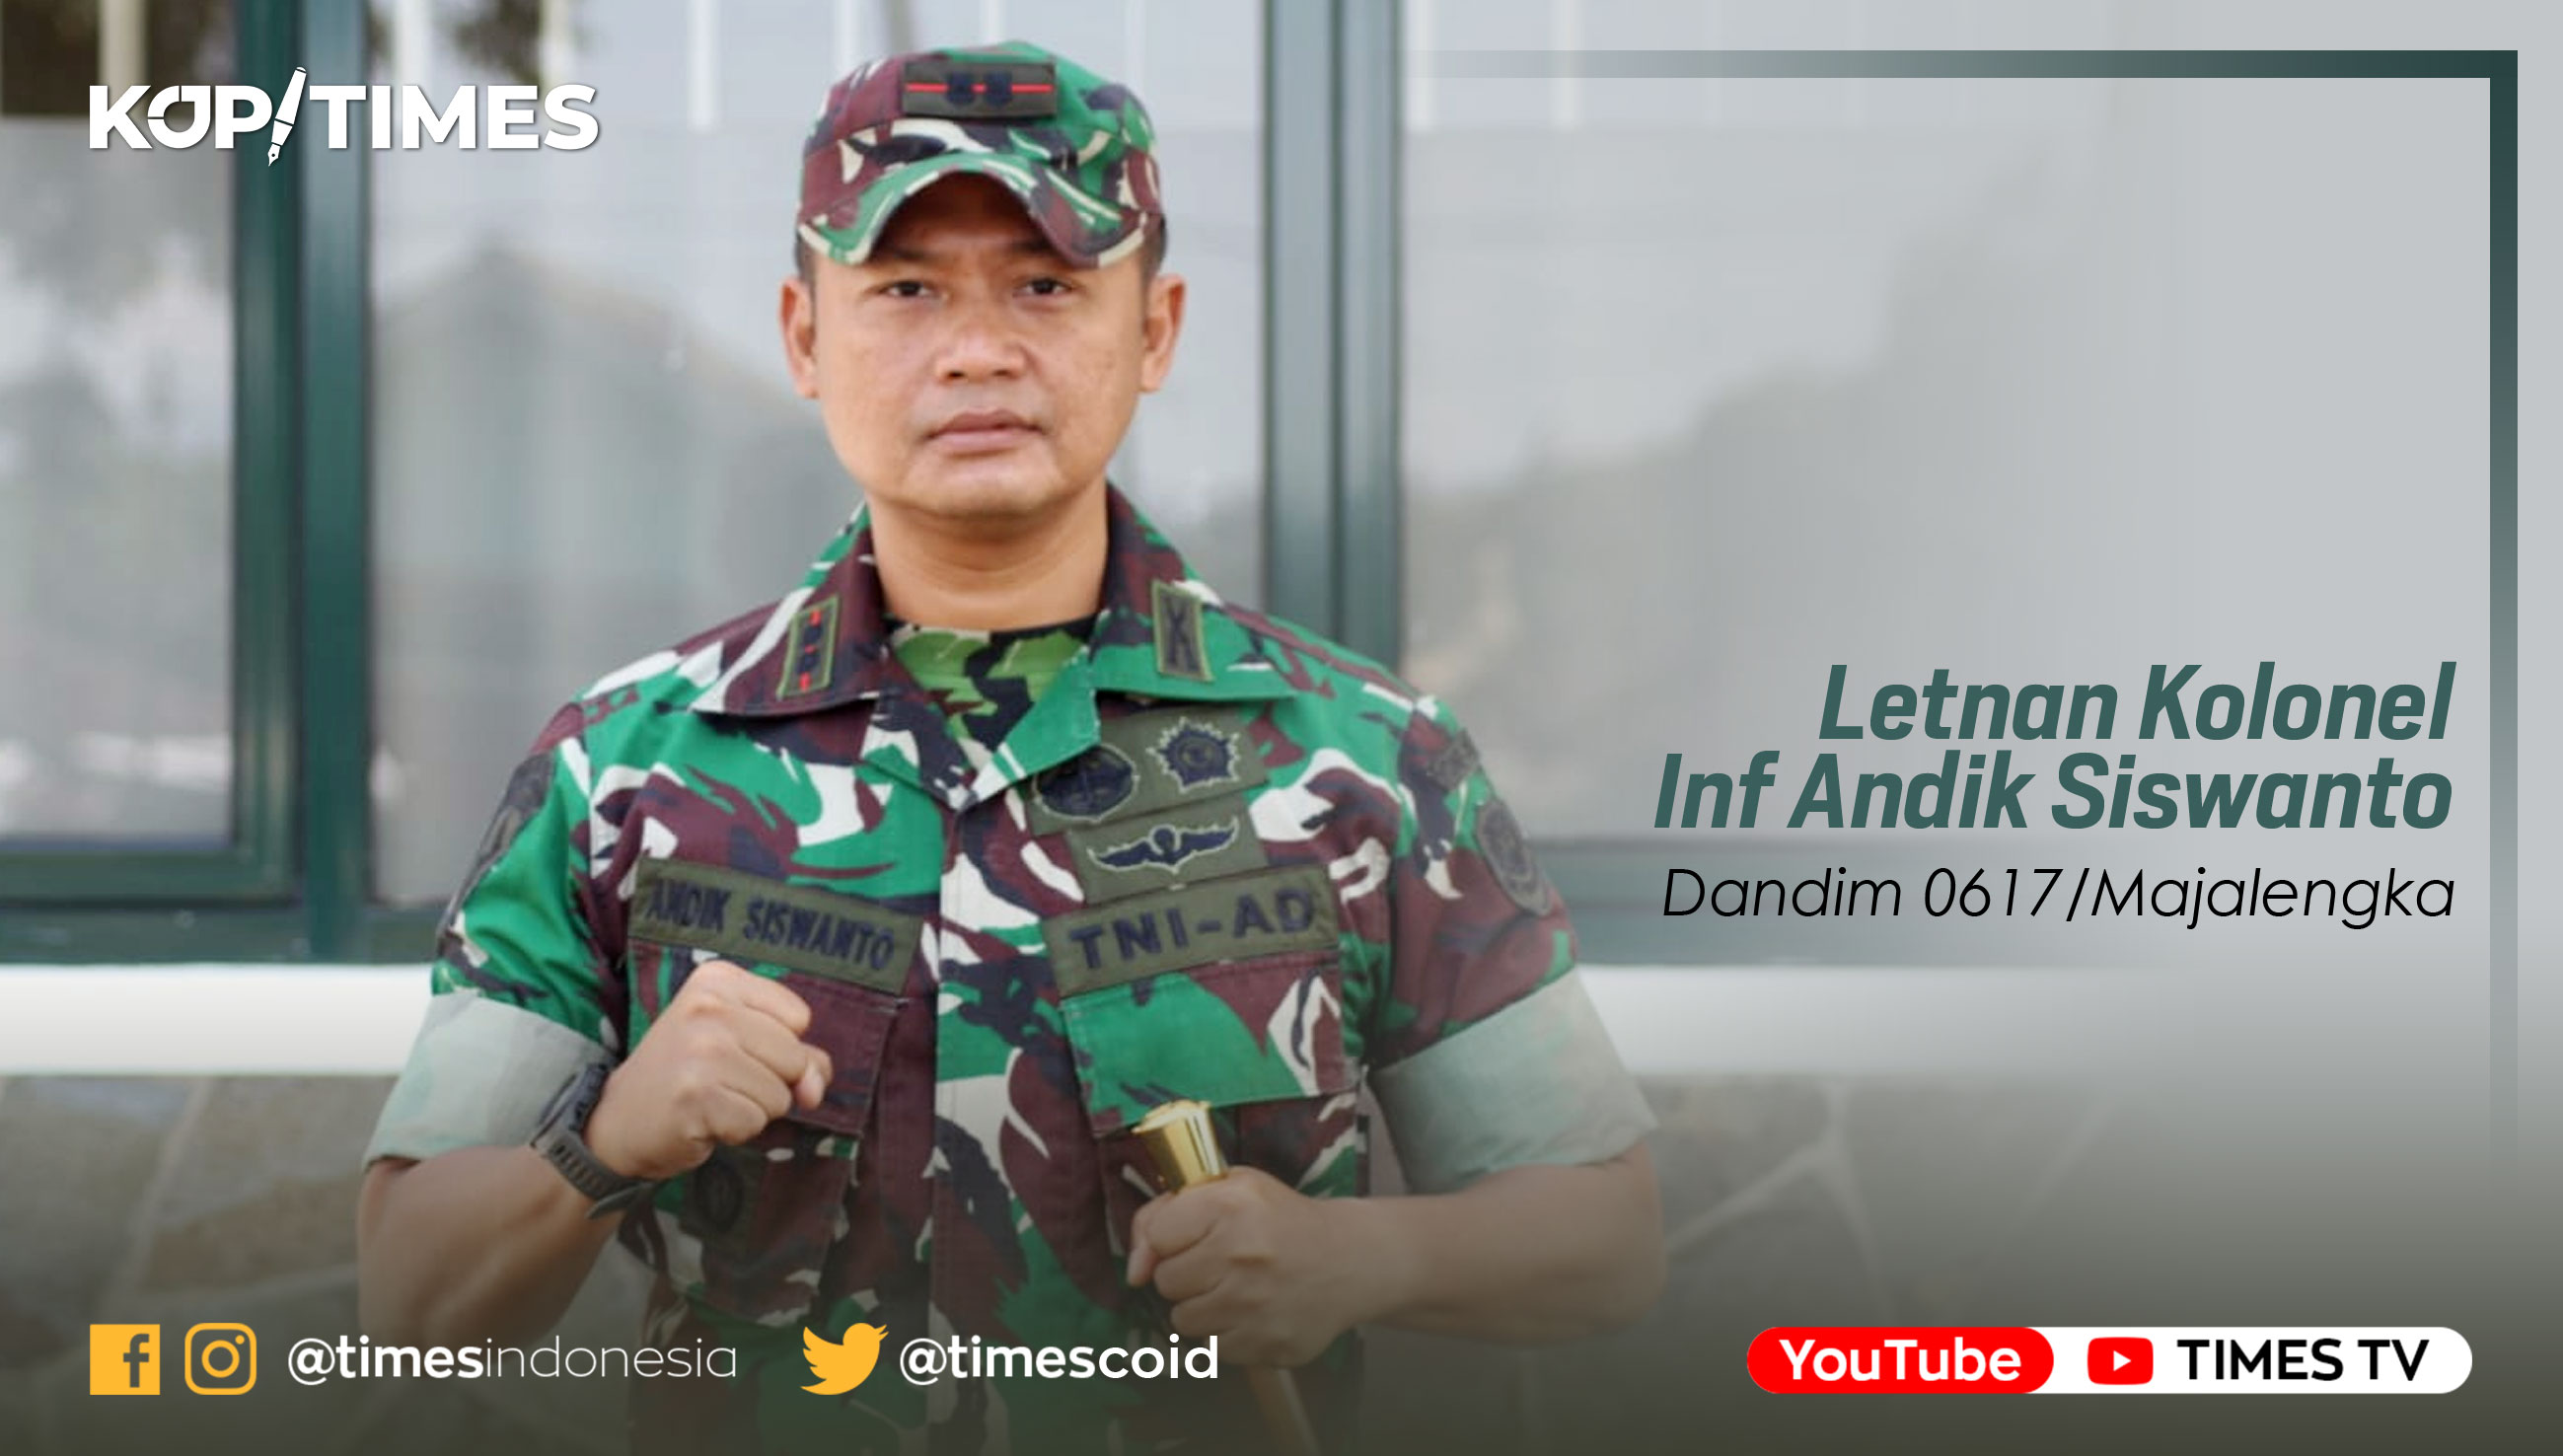 Letnan Kolonel Inf Andik Siswanto, S.I.P, M.I.pol, Dandim 0617/Majalengka